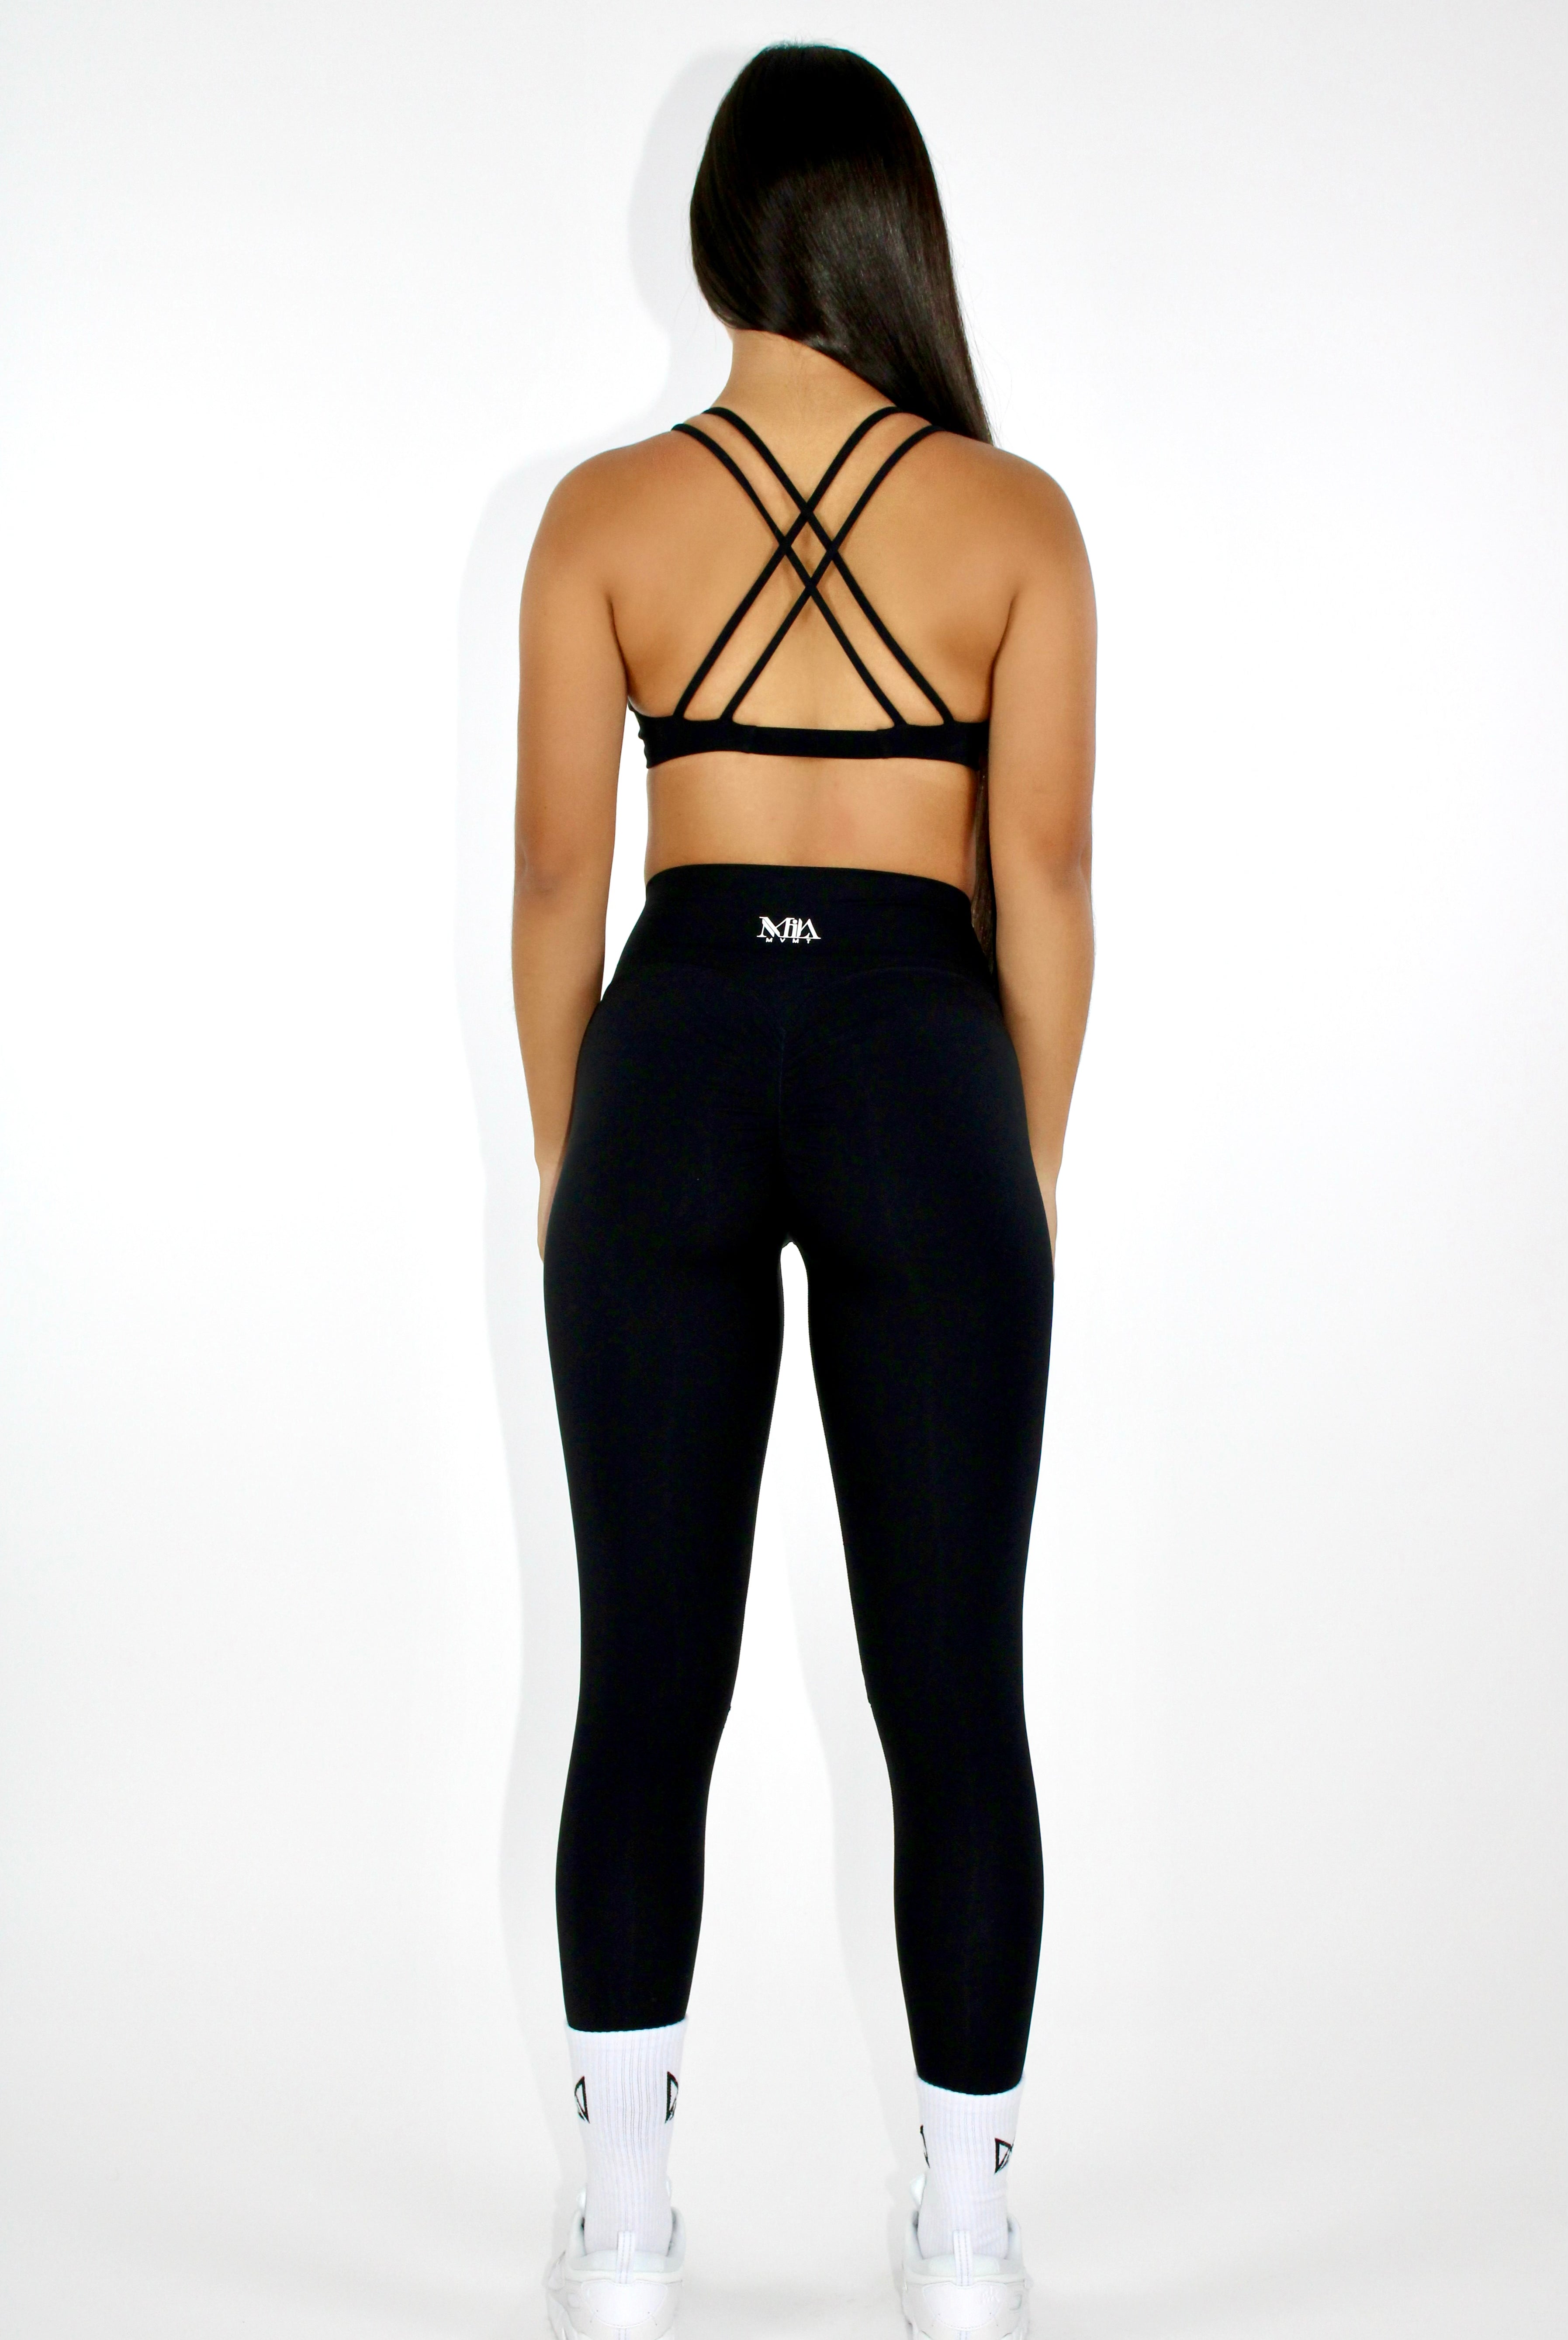 MILA MVMT Athletic Sportswear Aria Sports Bra & Buttery Soft Leggings & Shorts Gym Set Black Strappy Back - Back View